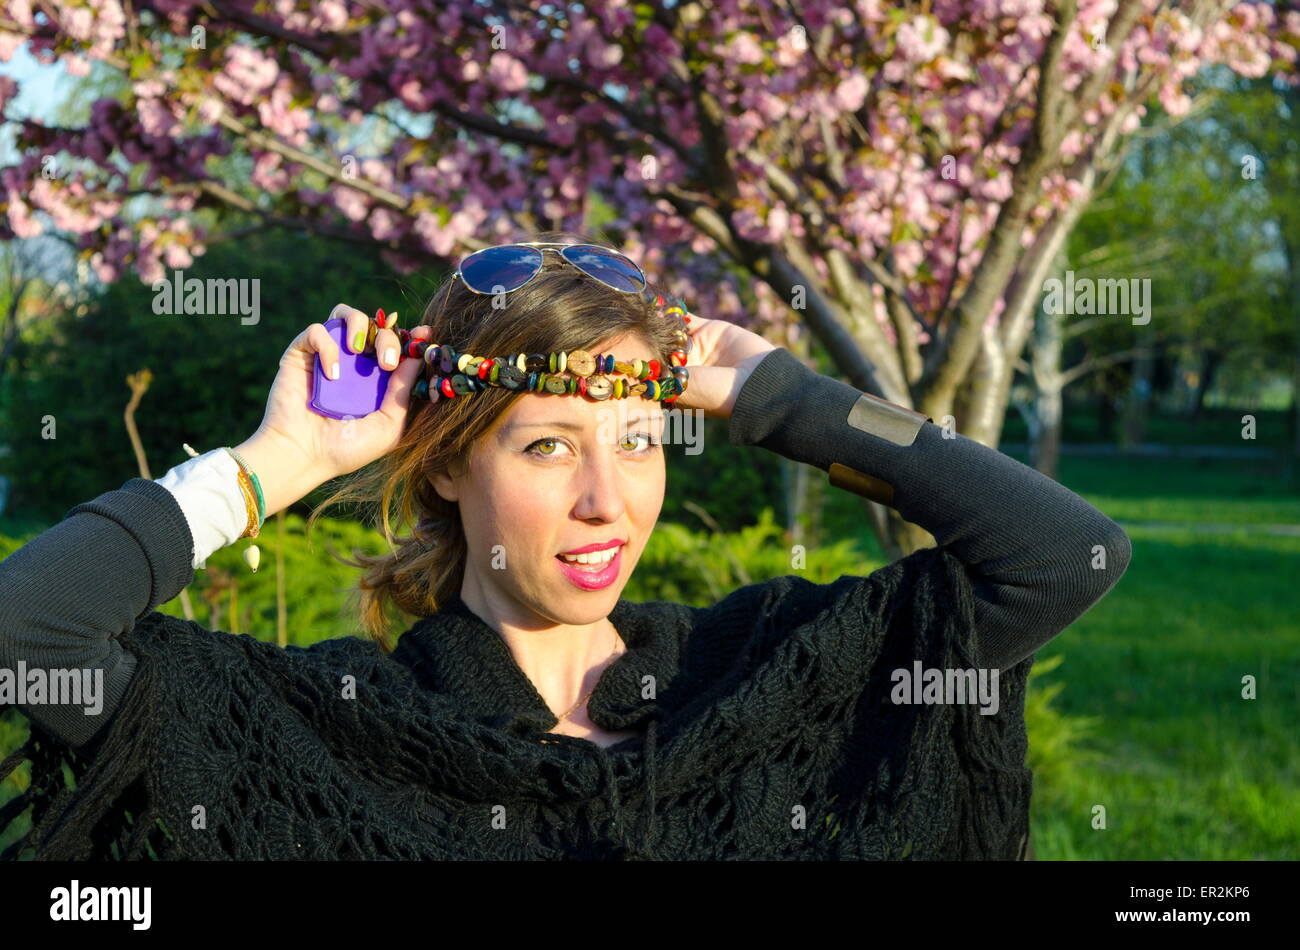 Chica Hippy posando con coloridos collares alrededor de su cabeza al aire libre Foto de stock